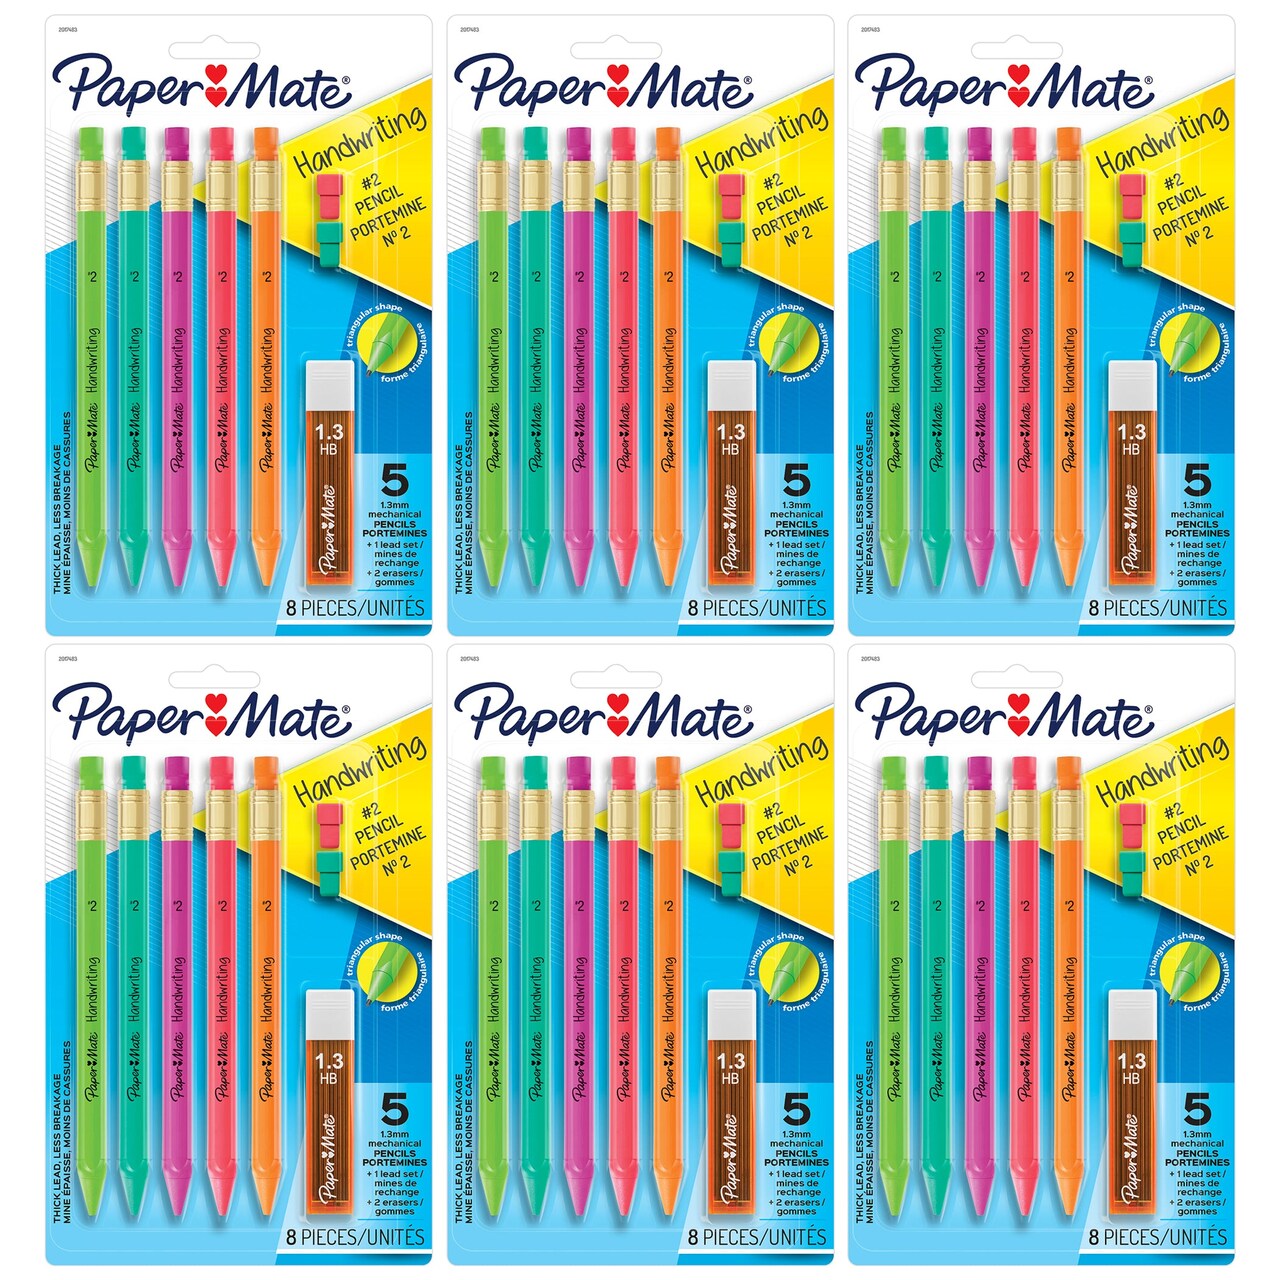 Handwriting Triangular Mechanical Pencil Set with Lead &#x26; Eraser Refills, 1.3mm, 5 Per Pack, 6 Packs